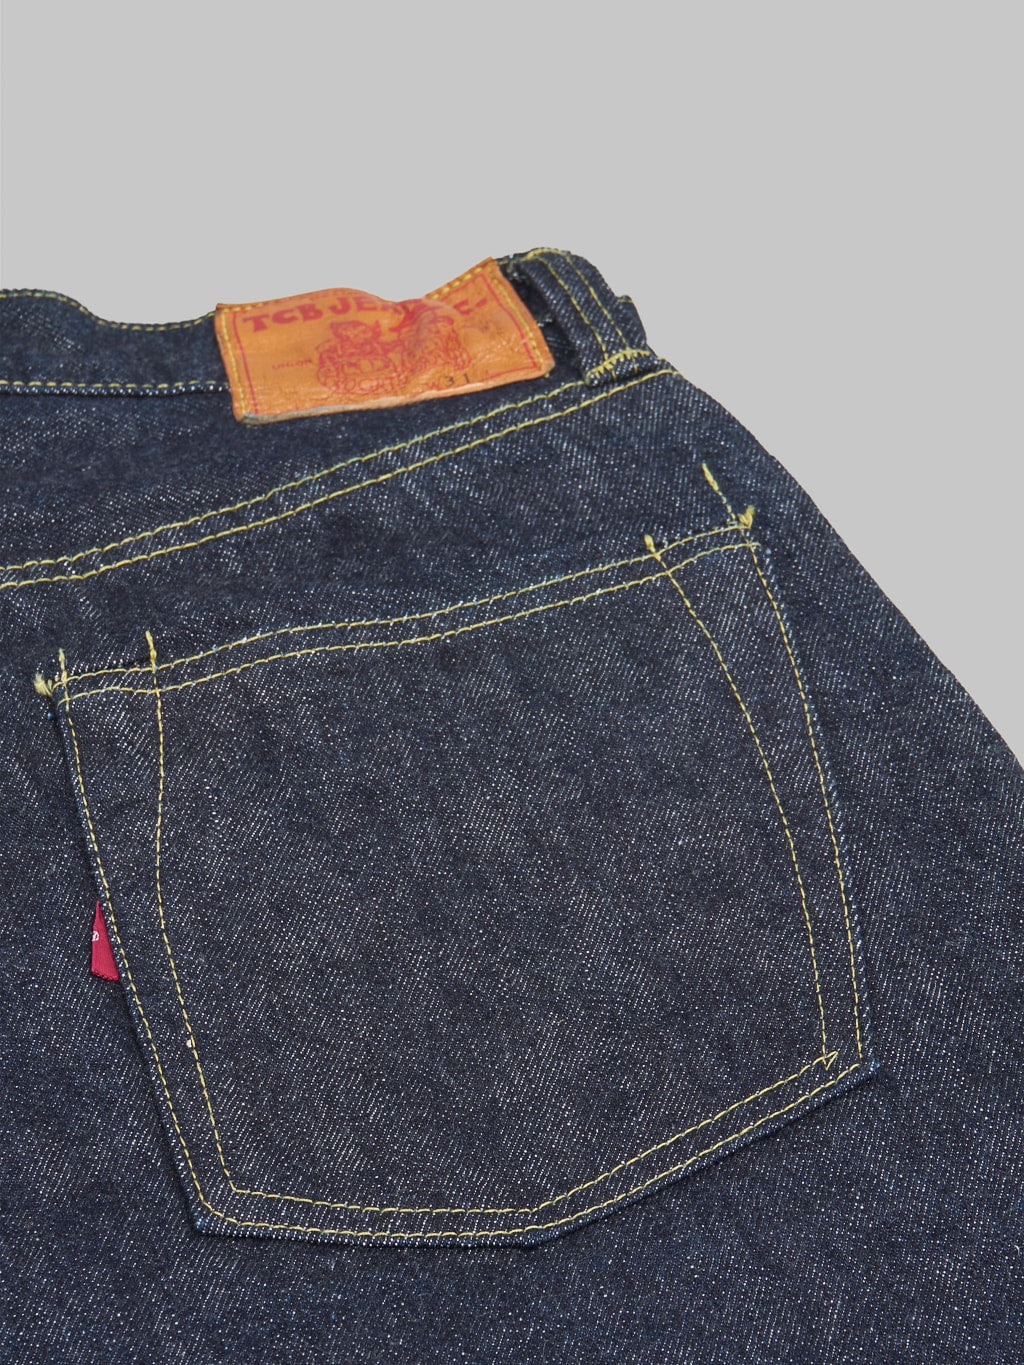 tcb s40s regular straight jeans back stitching